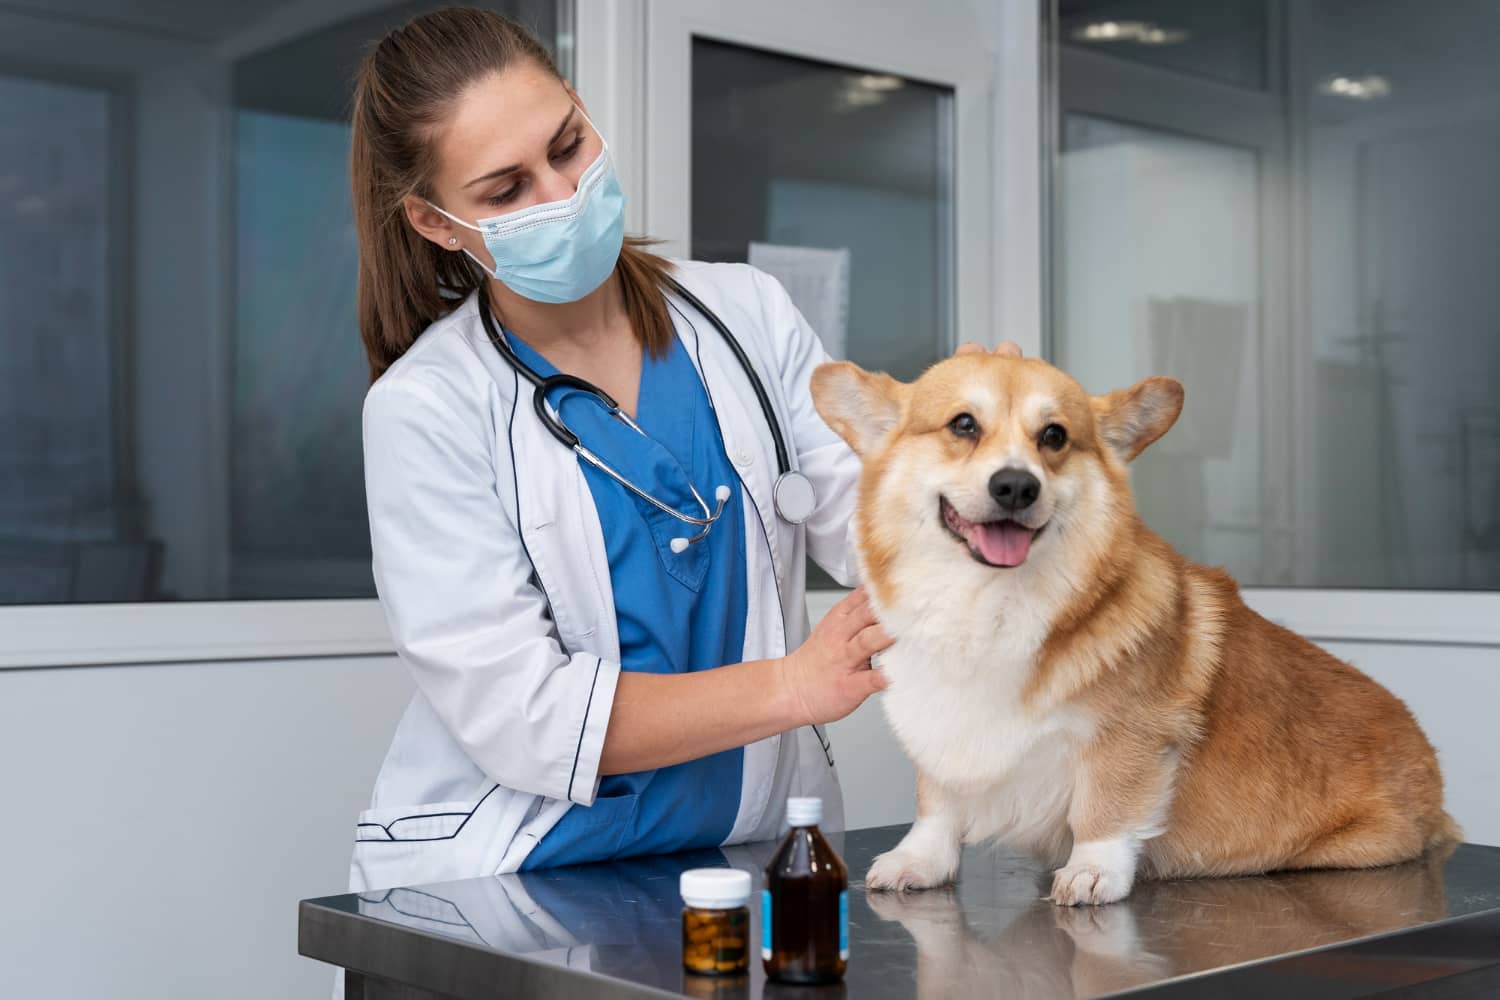 canine respiratory disease